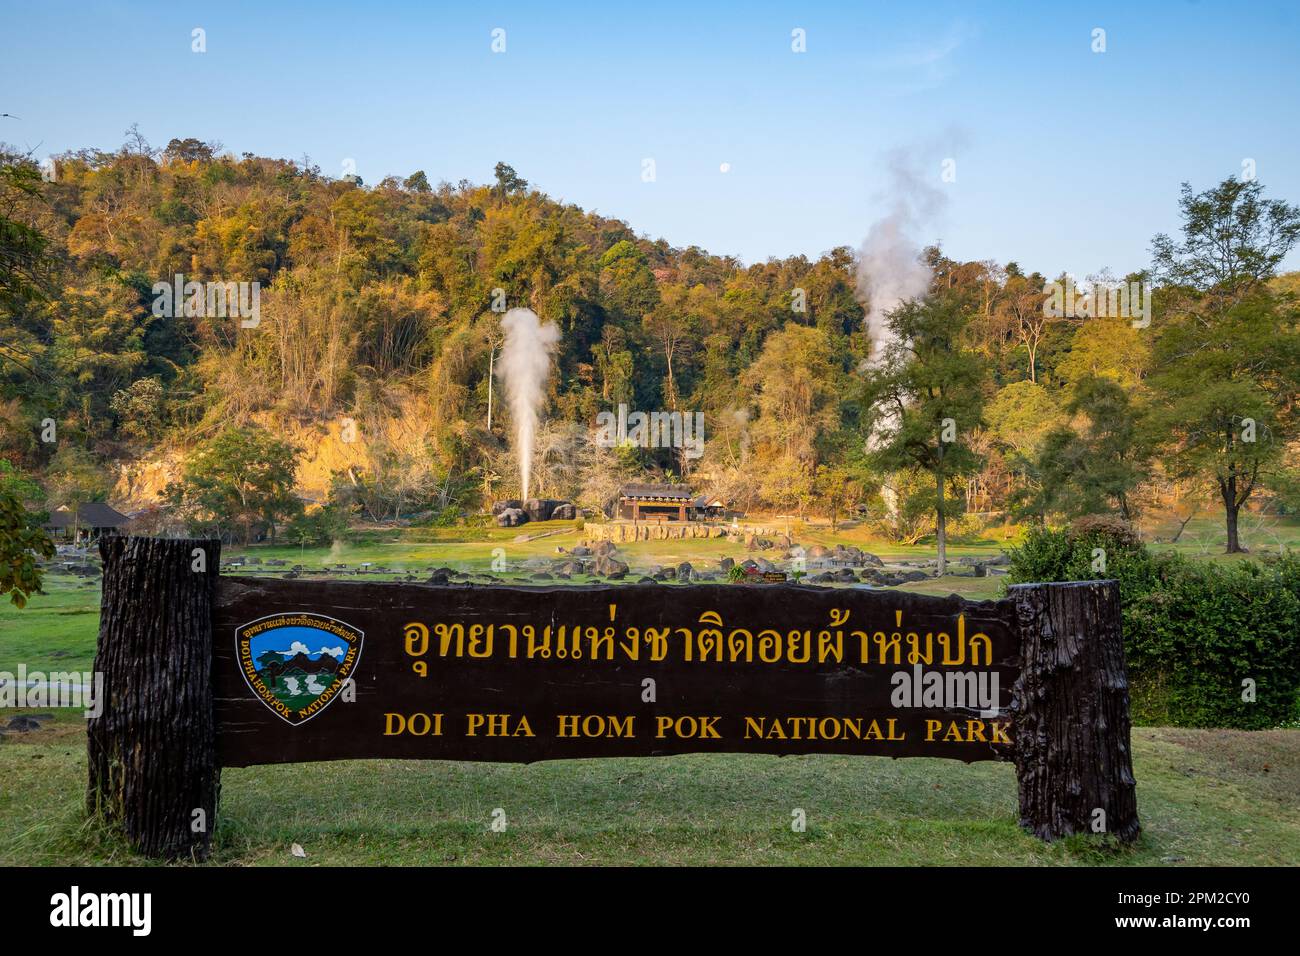 Geyser eruption at Fang Hot Spring. Doi Pha Hom Pok National Park, Chiang Mai, Thailand. Stock Photo